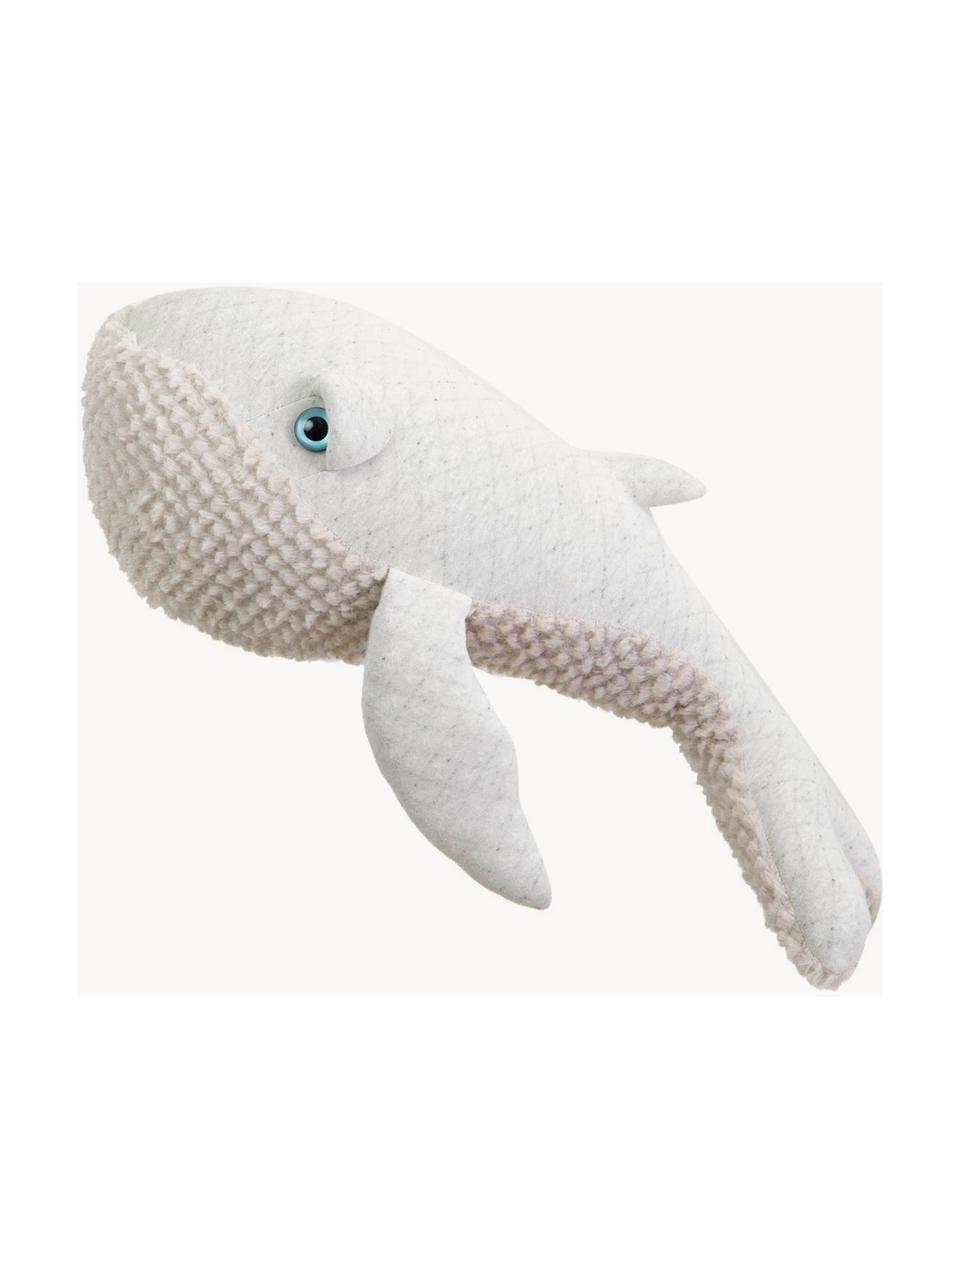 Handgemaakte knuffelkussen Whale, Onderzijde: 85% katoen, 15% polyester, Wit, B 56 x H 25 cm